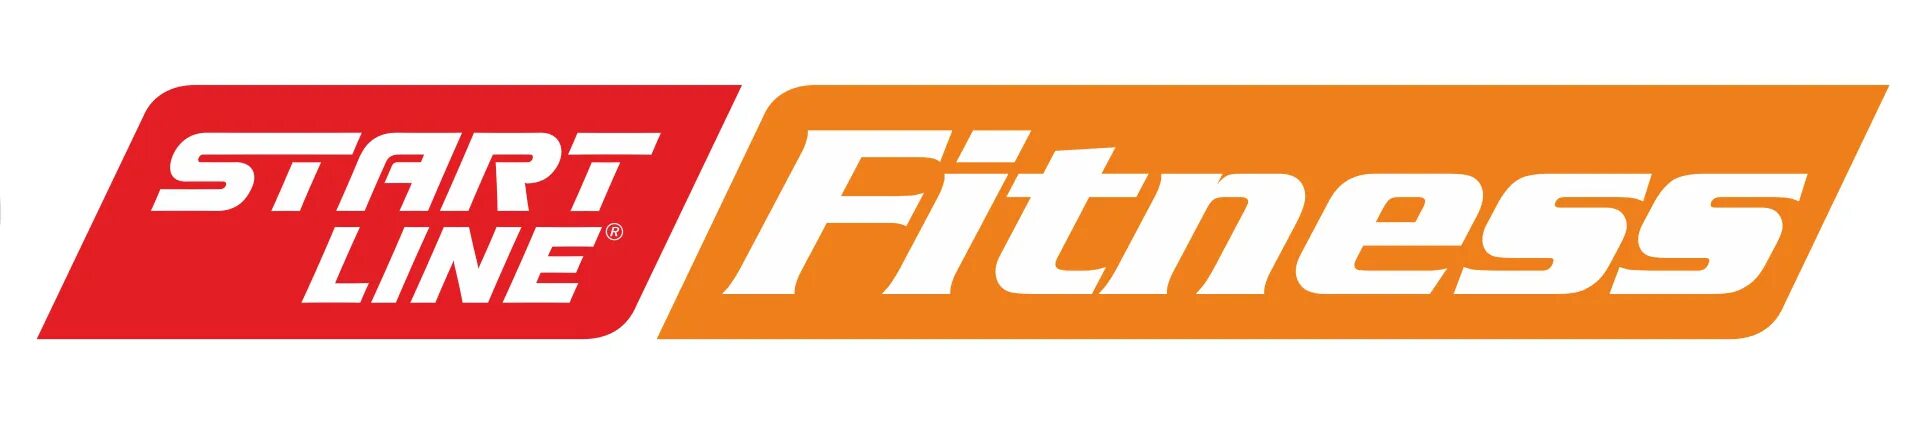 Https start line. Start line логотип. Логотип старт фитнес. Start line Fitness. Start line Fitness логотип тренажеры.